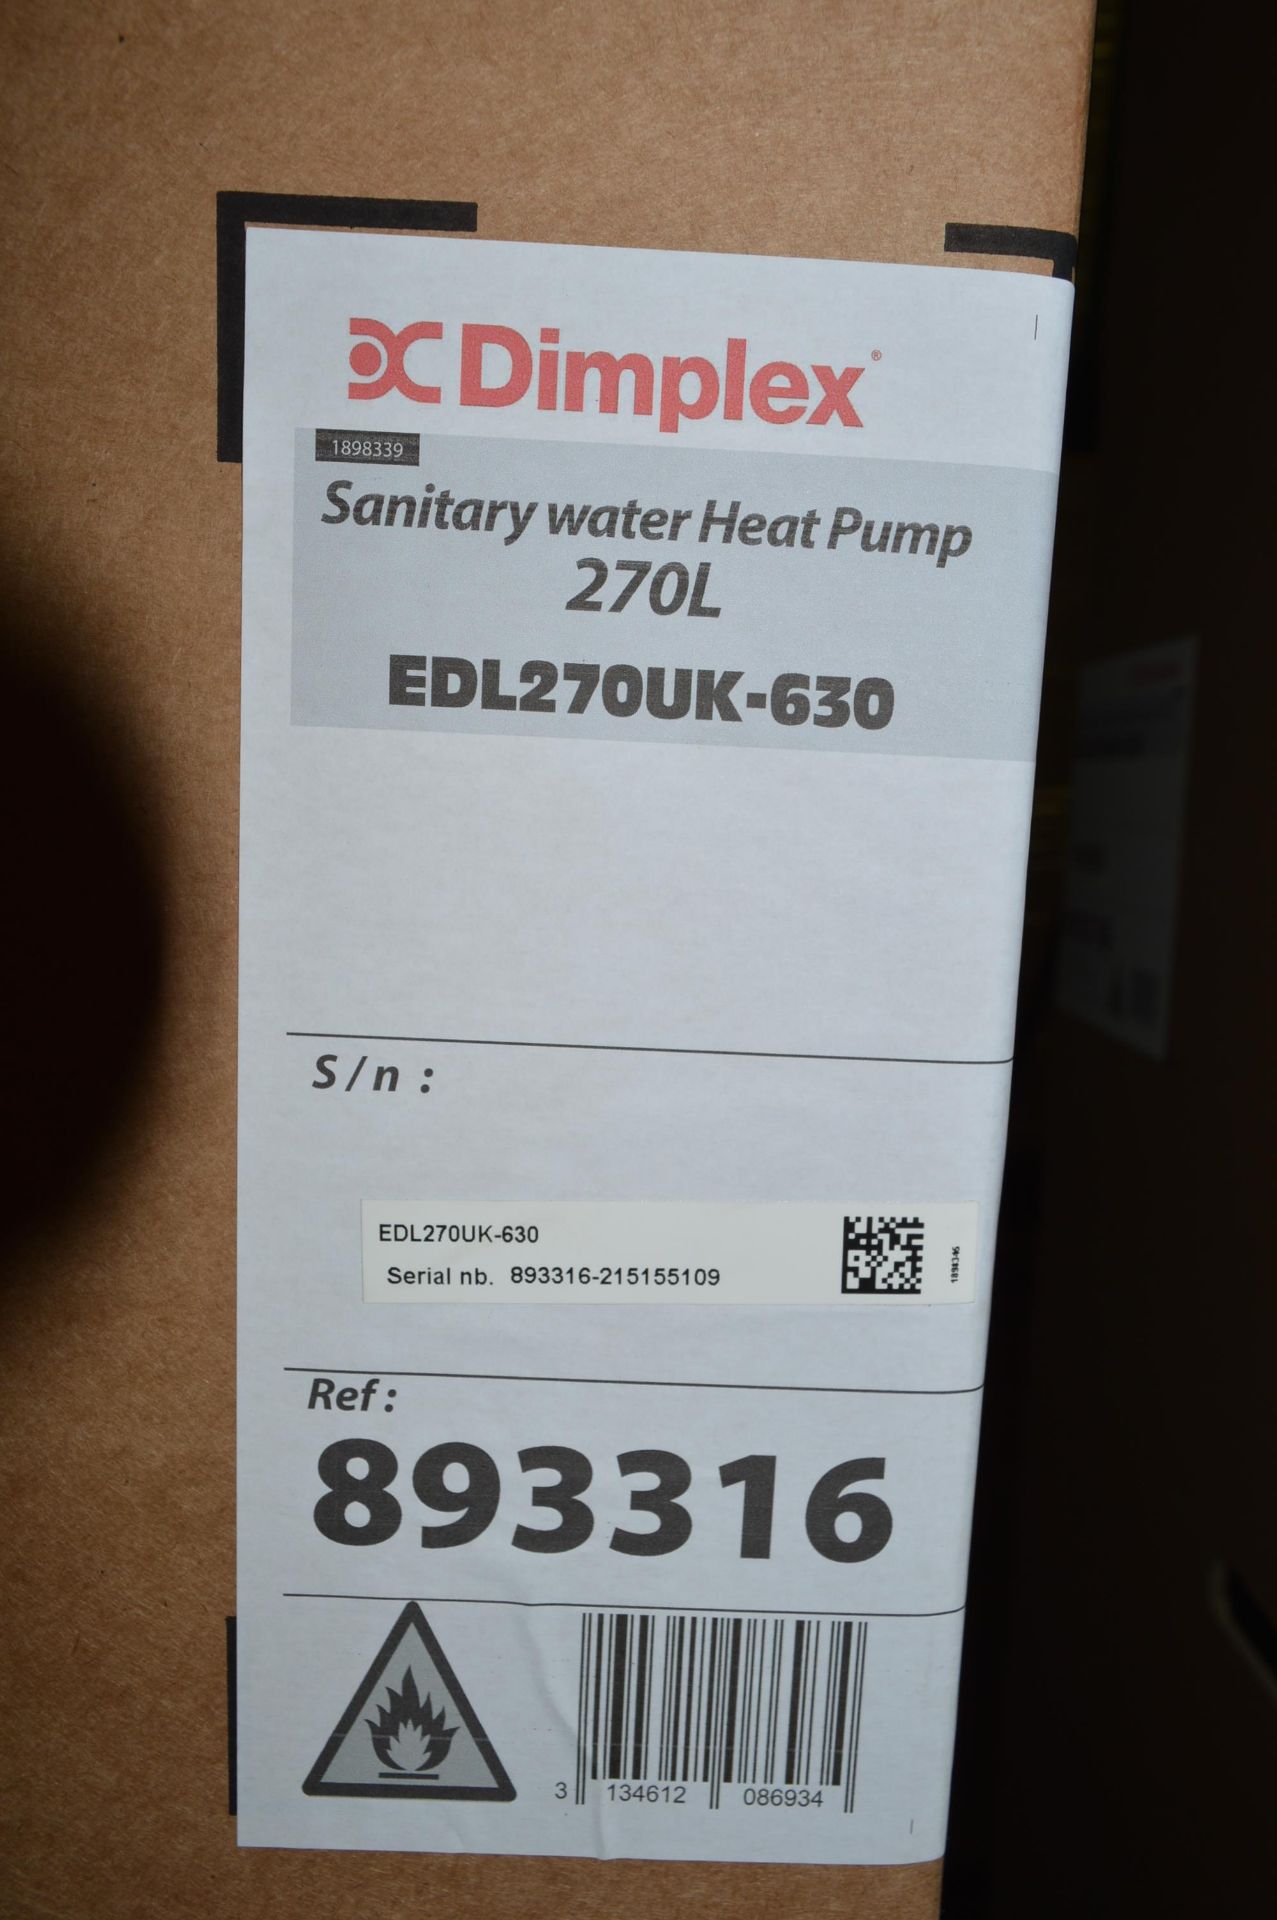 Dimplex, sanitary water heat pump, 270L, Model EDL270UK-630, Serial No. 893316-215155109 (packaged) - Image 2 of 2